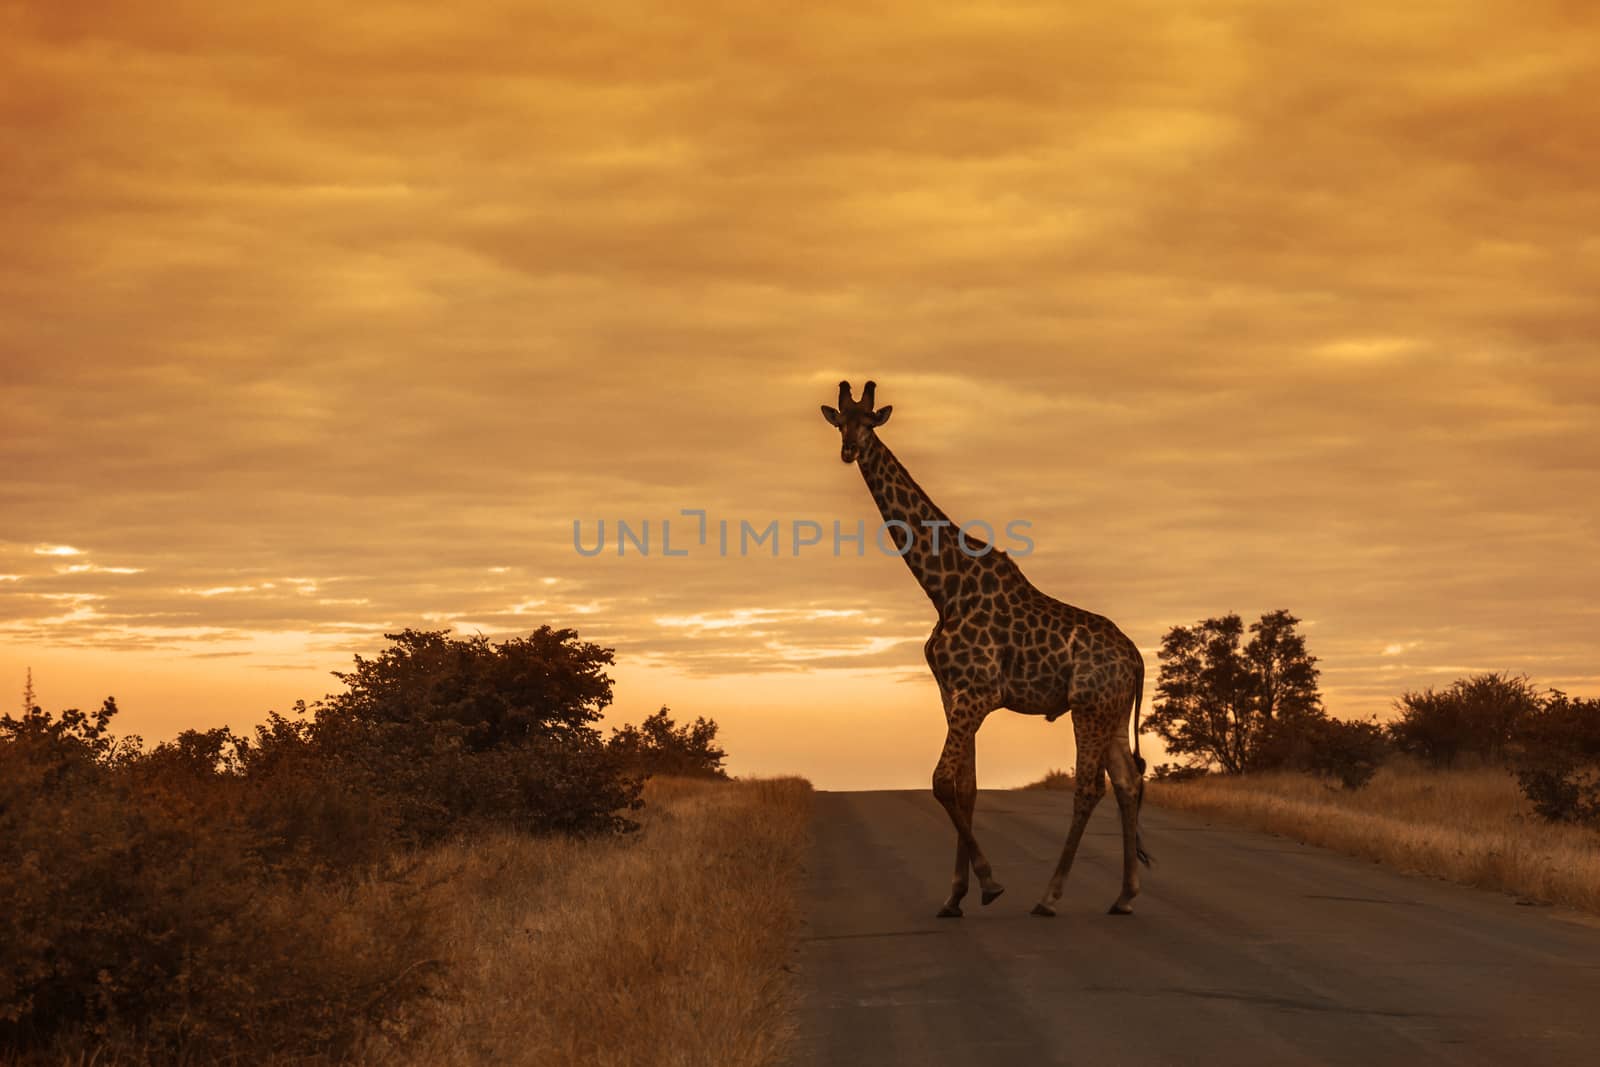 Giraffe crossing safari road at sunrise in Kruger National park, South Africa ; Specie Giraffa camelopardalis family of Giraffidae